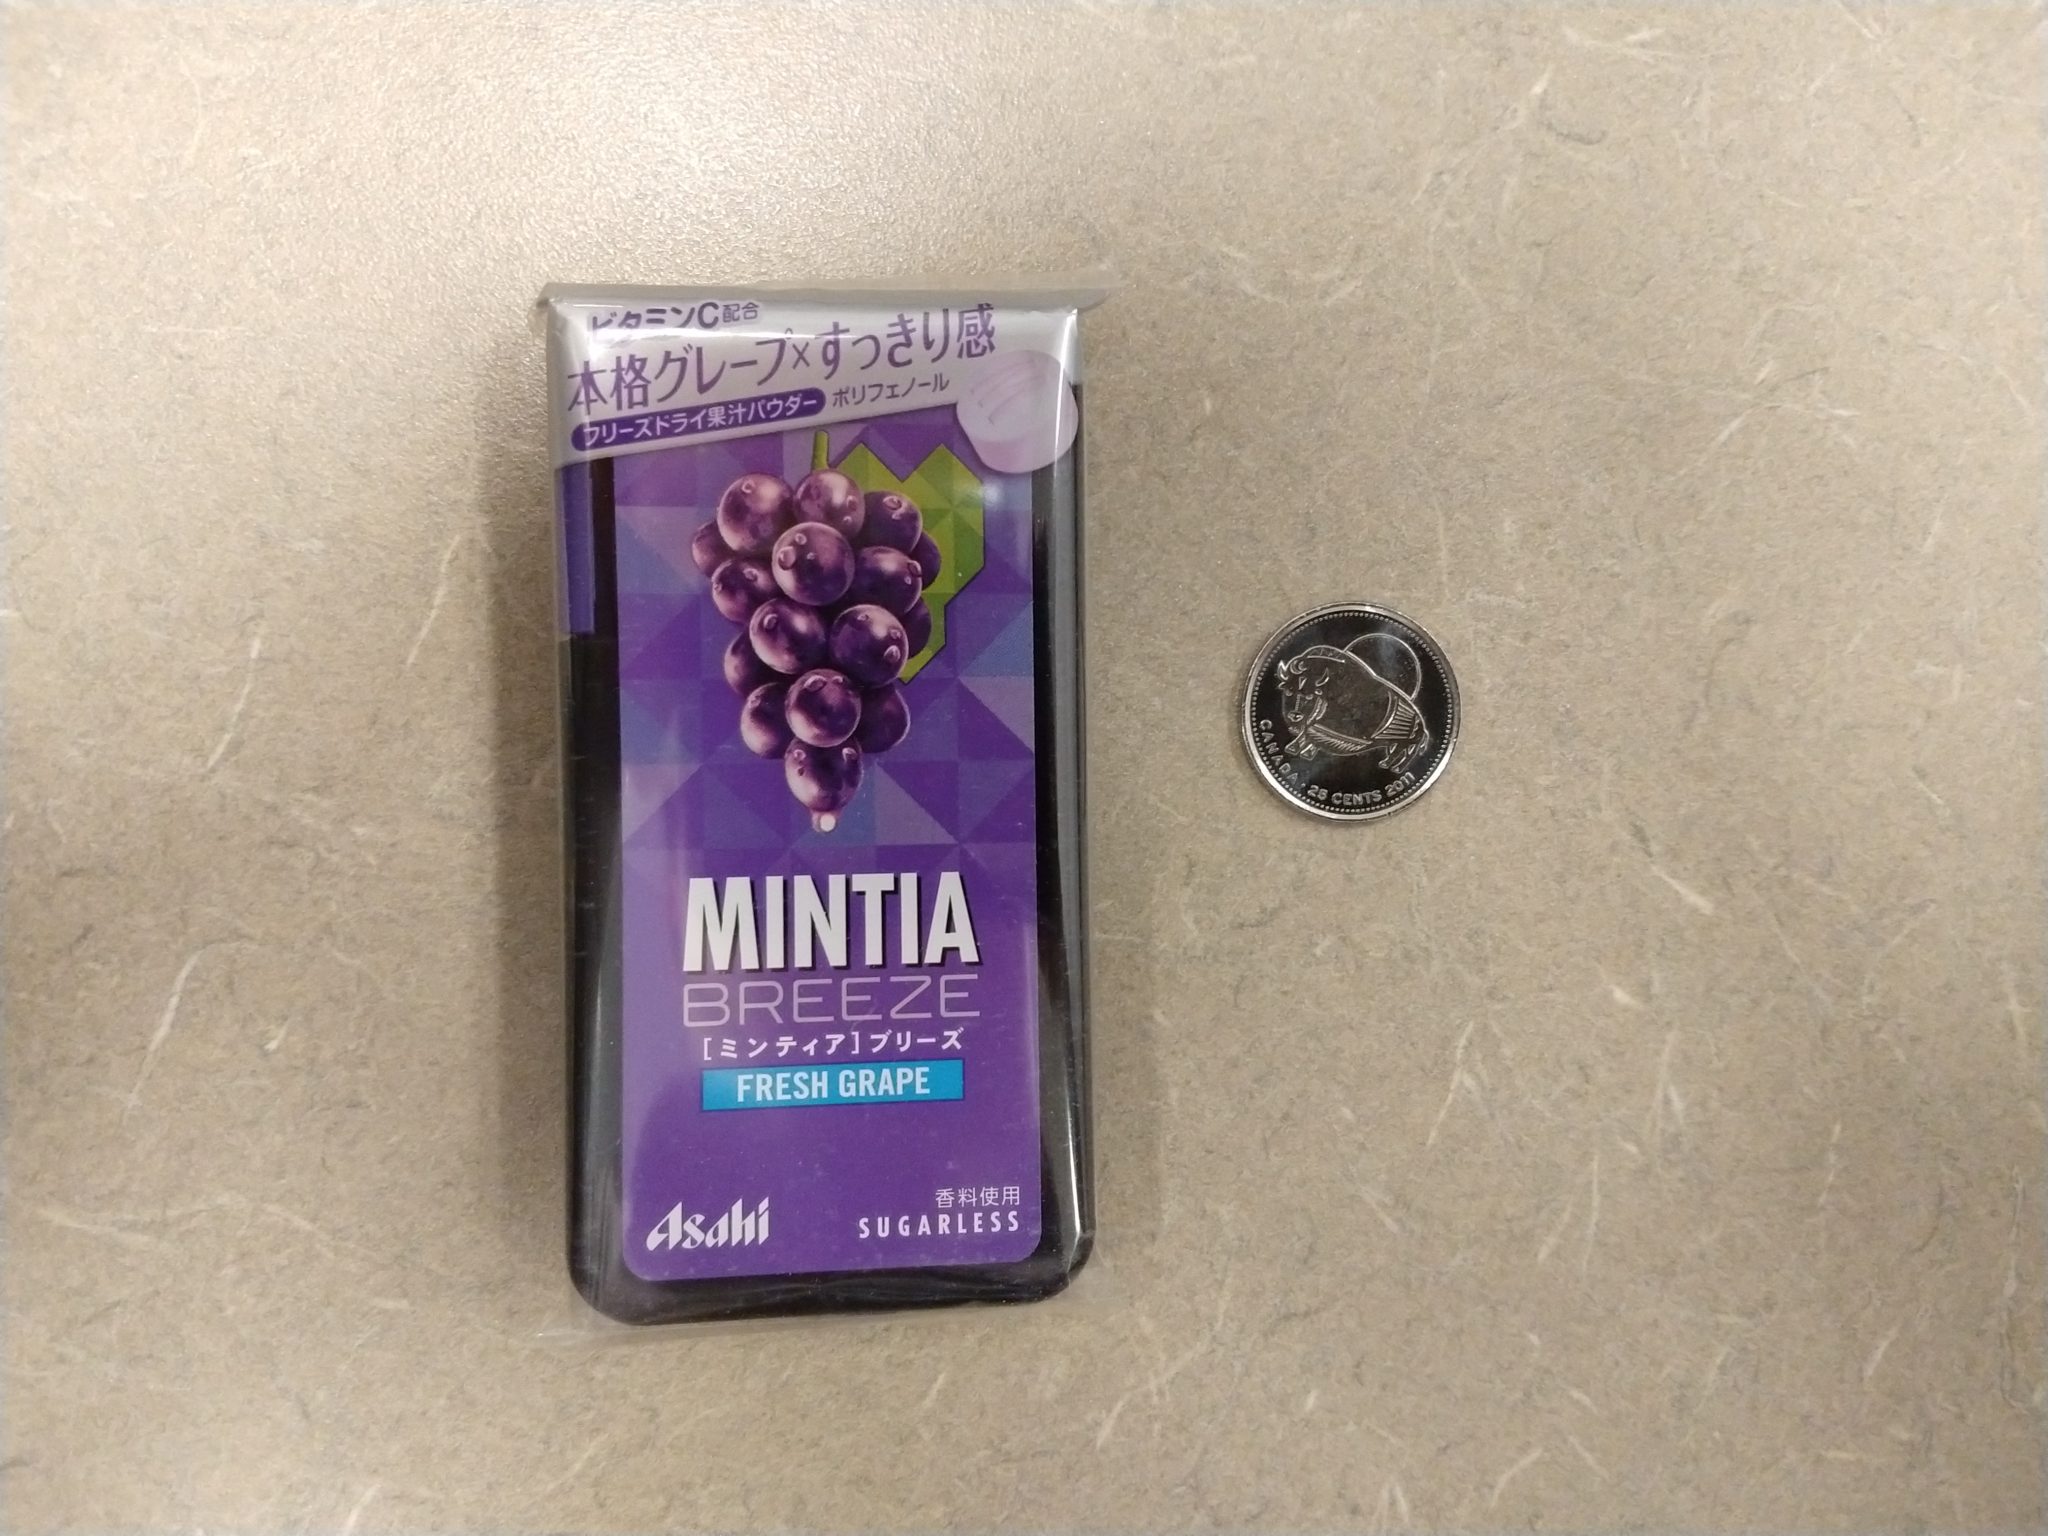 Mintia Breeze – Fresh Grape